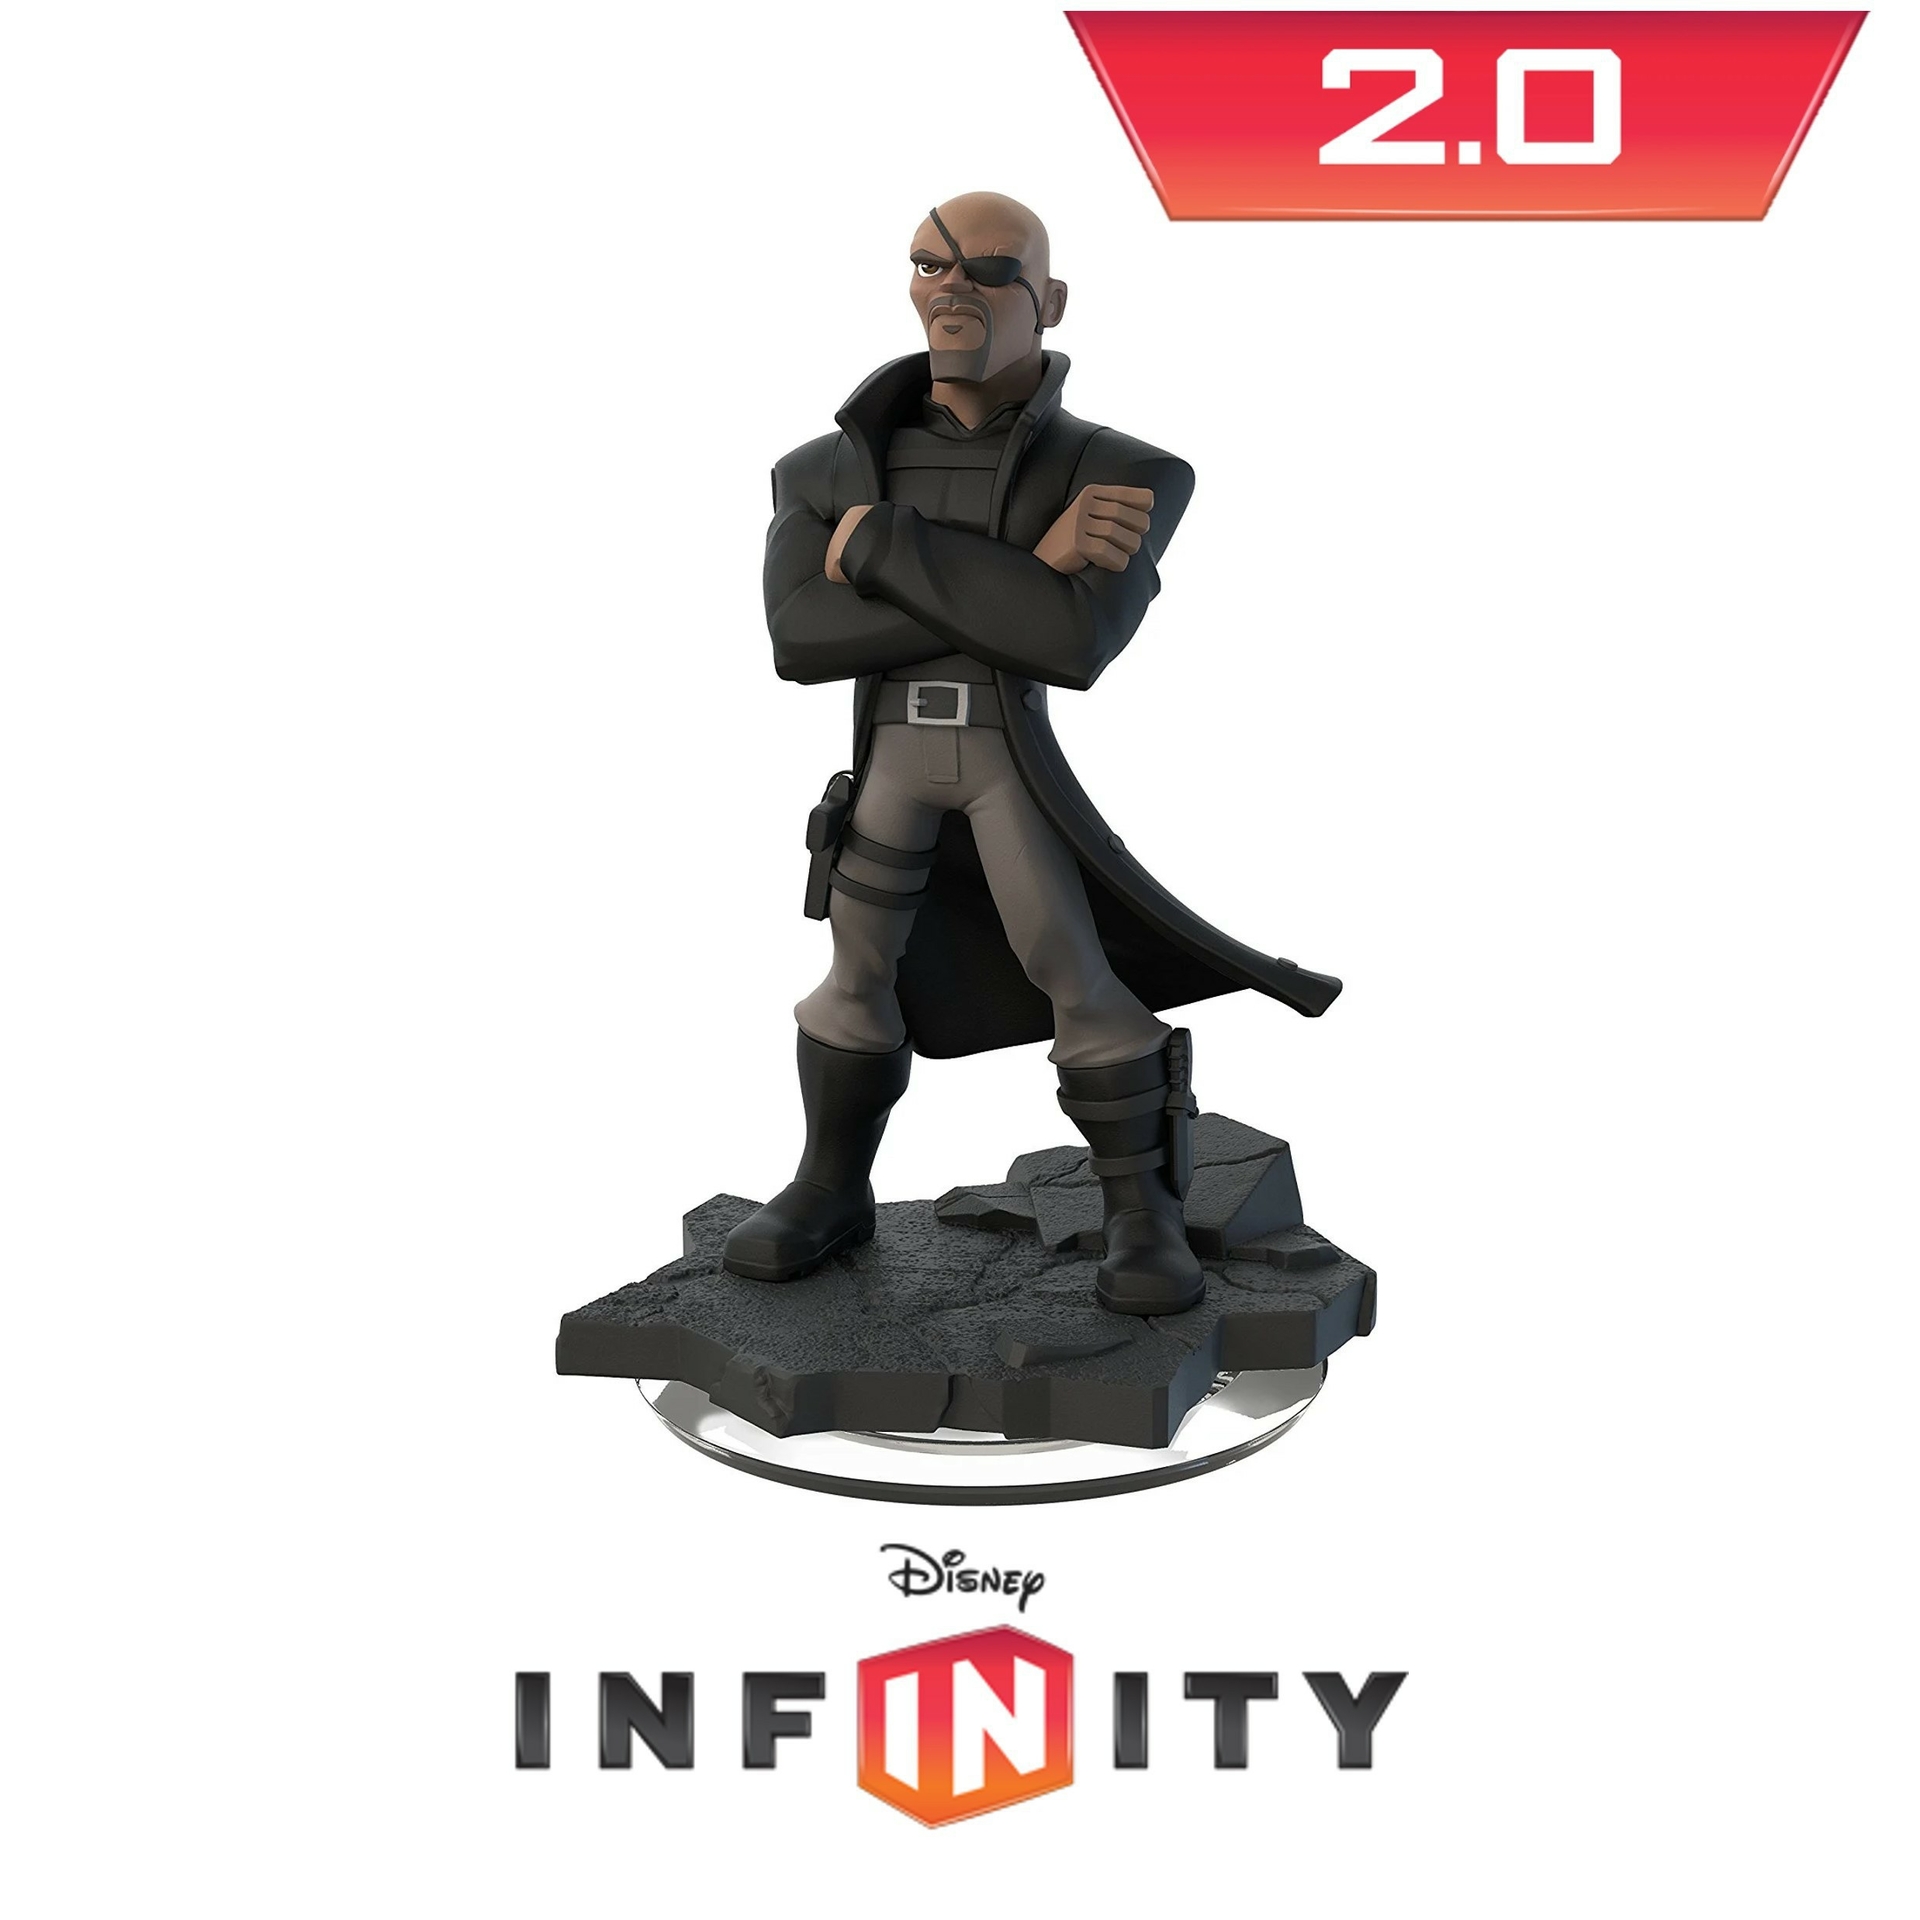 Disney Infinity - Nick Fury - Wii Hardware